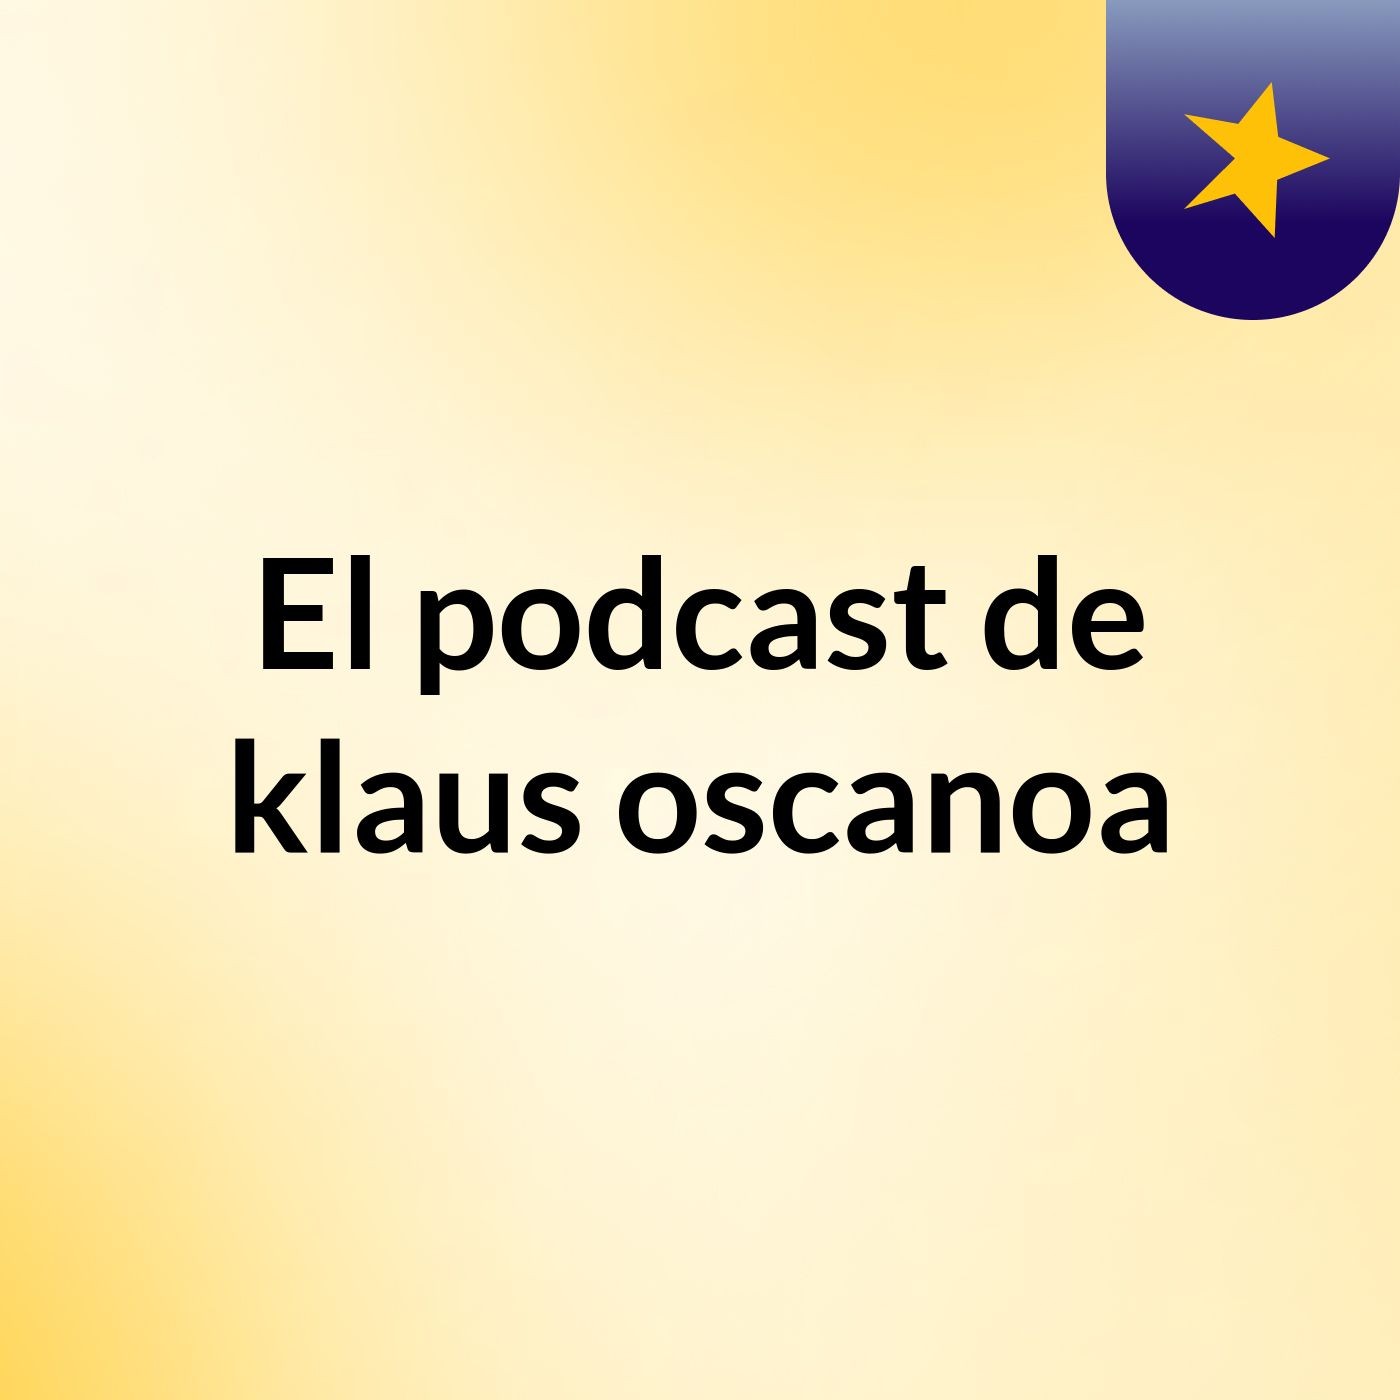 Episodio 2 - El podcast de klaus oscanoa